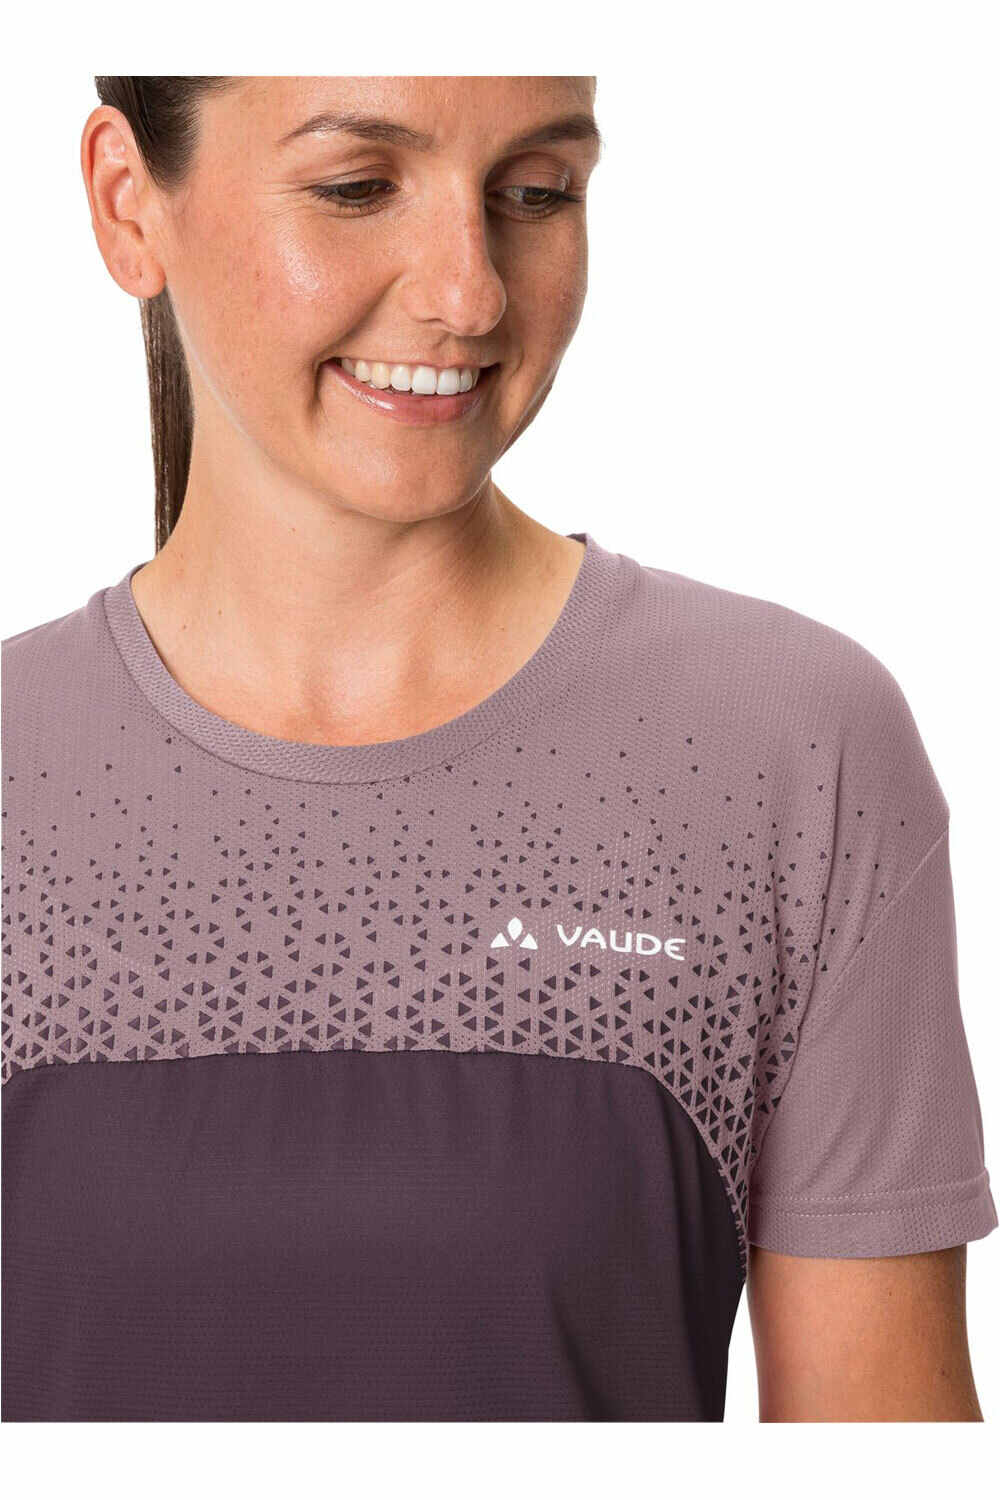 Vaude camiseta ciclismo mujer Women's Moab T-Shirt VI 02